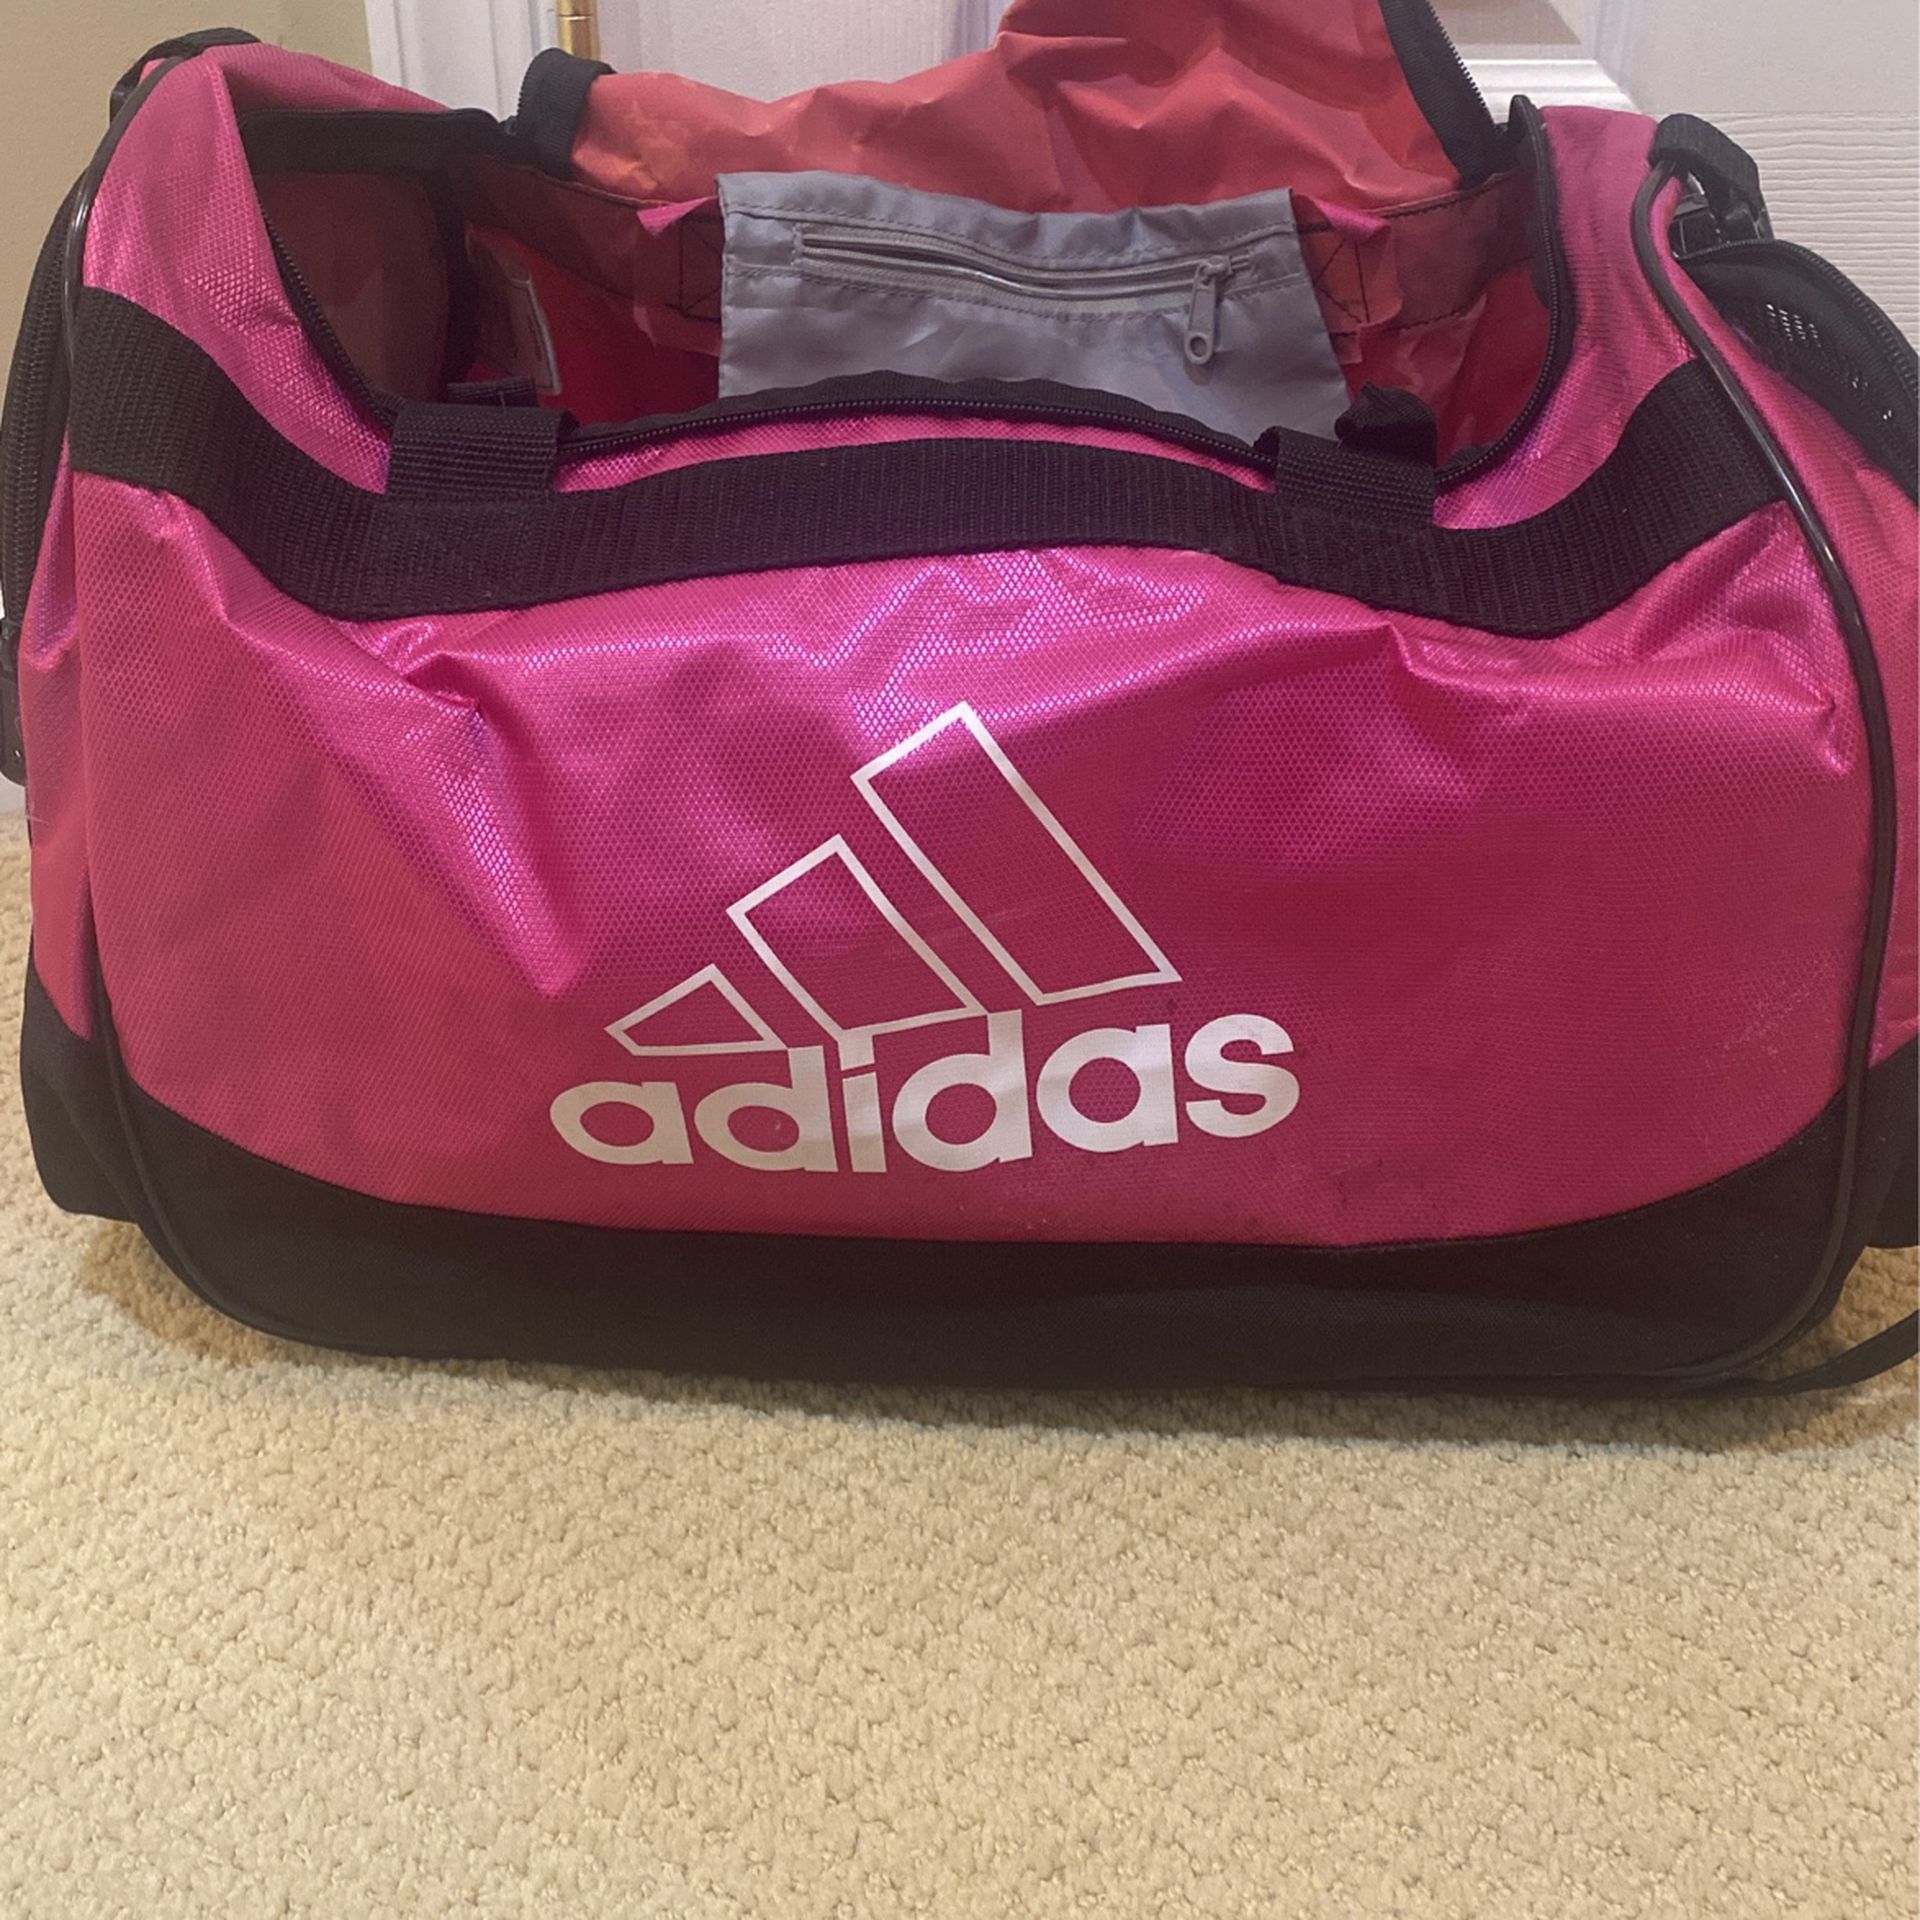 Adidas Gym bag   PINK